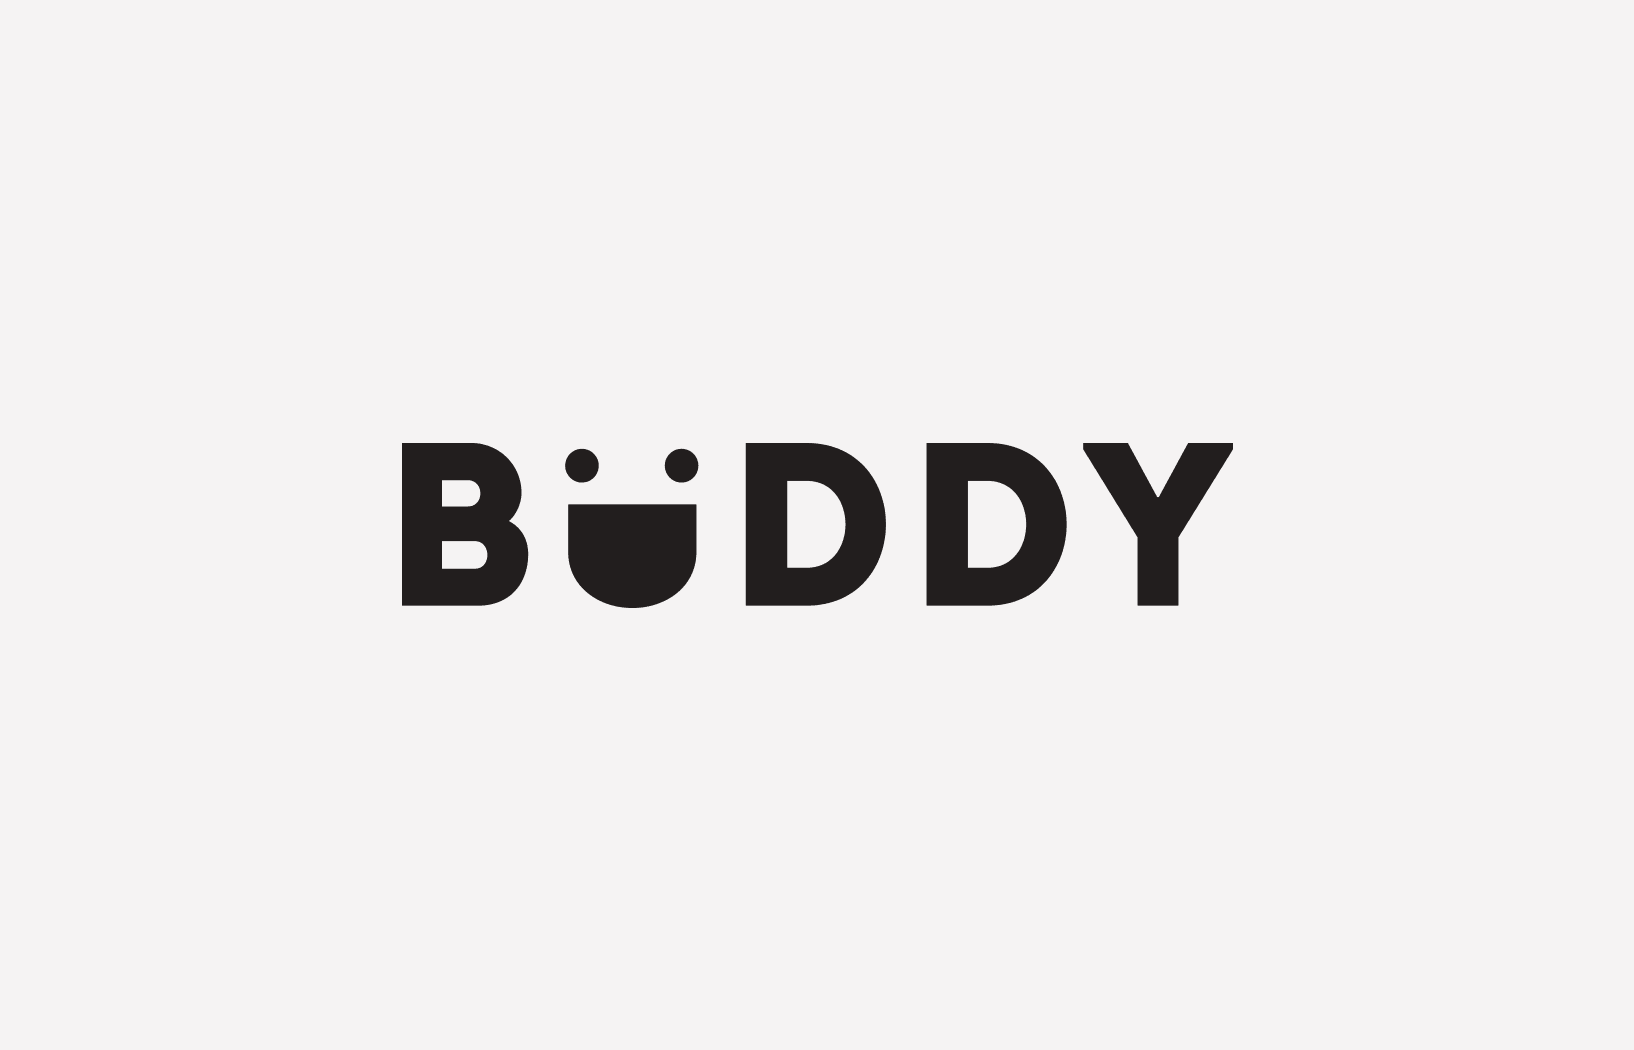 Buddy Logo - Buddy Logos